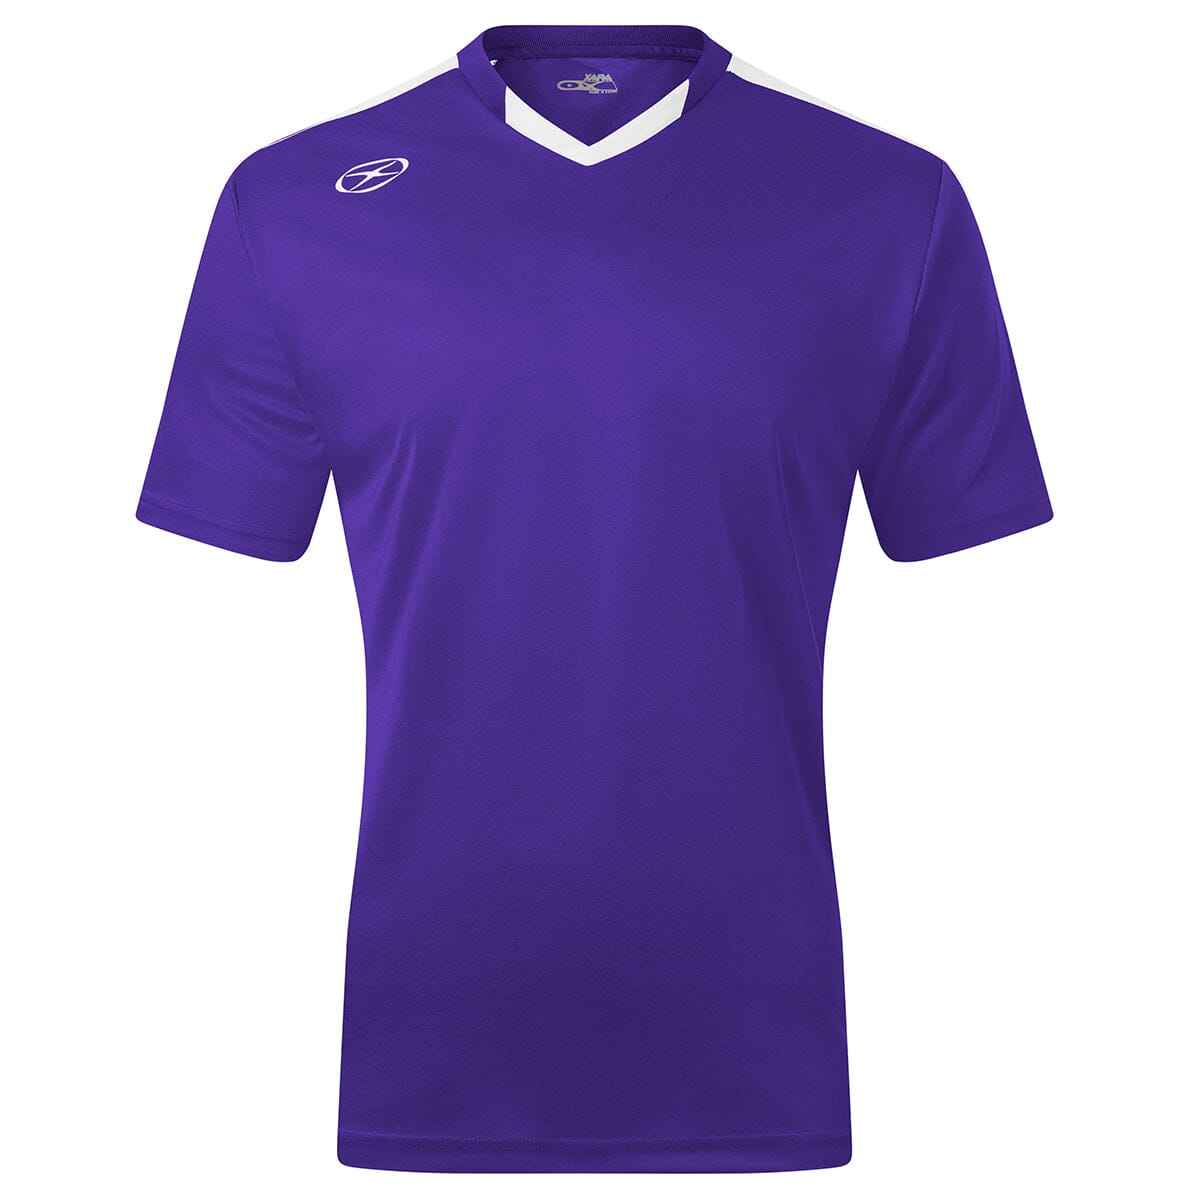 Britannia Jersey - Home Colors - Male Shirt Xara Soccer Purple/White Youth Medium 